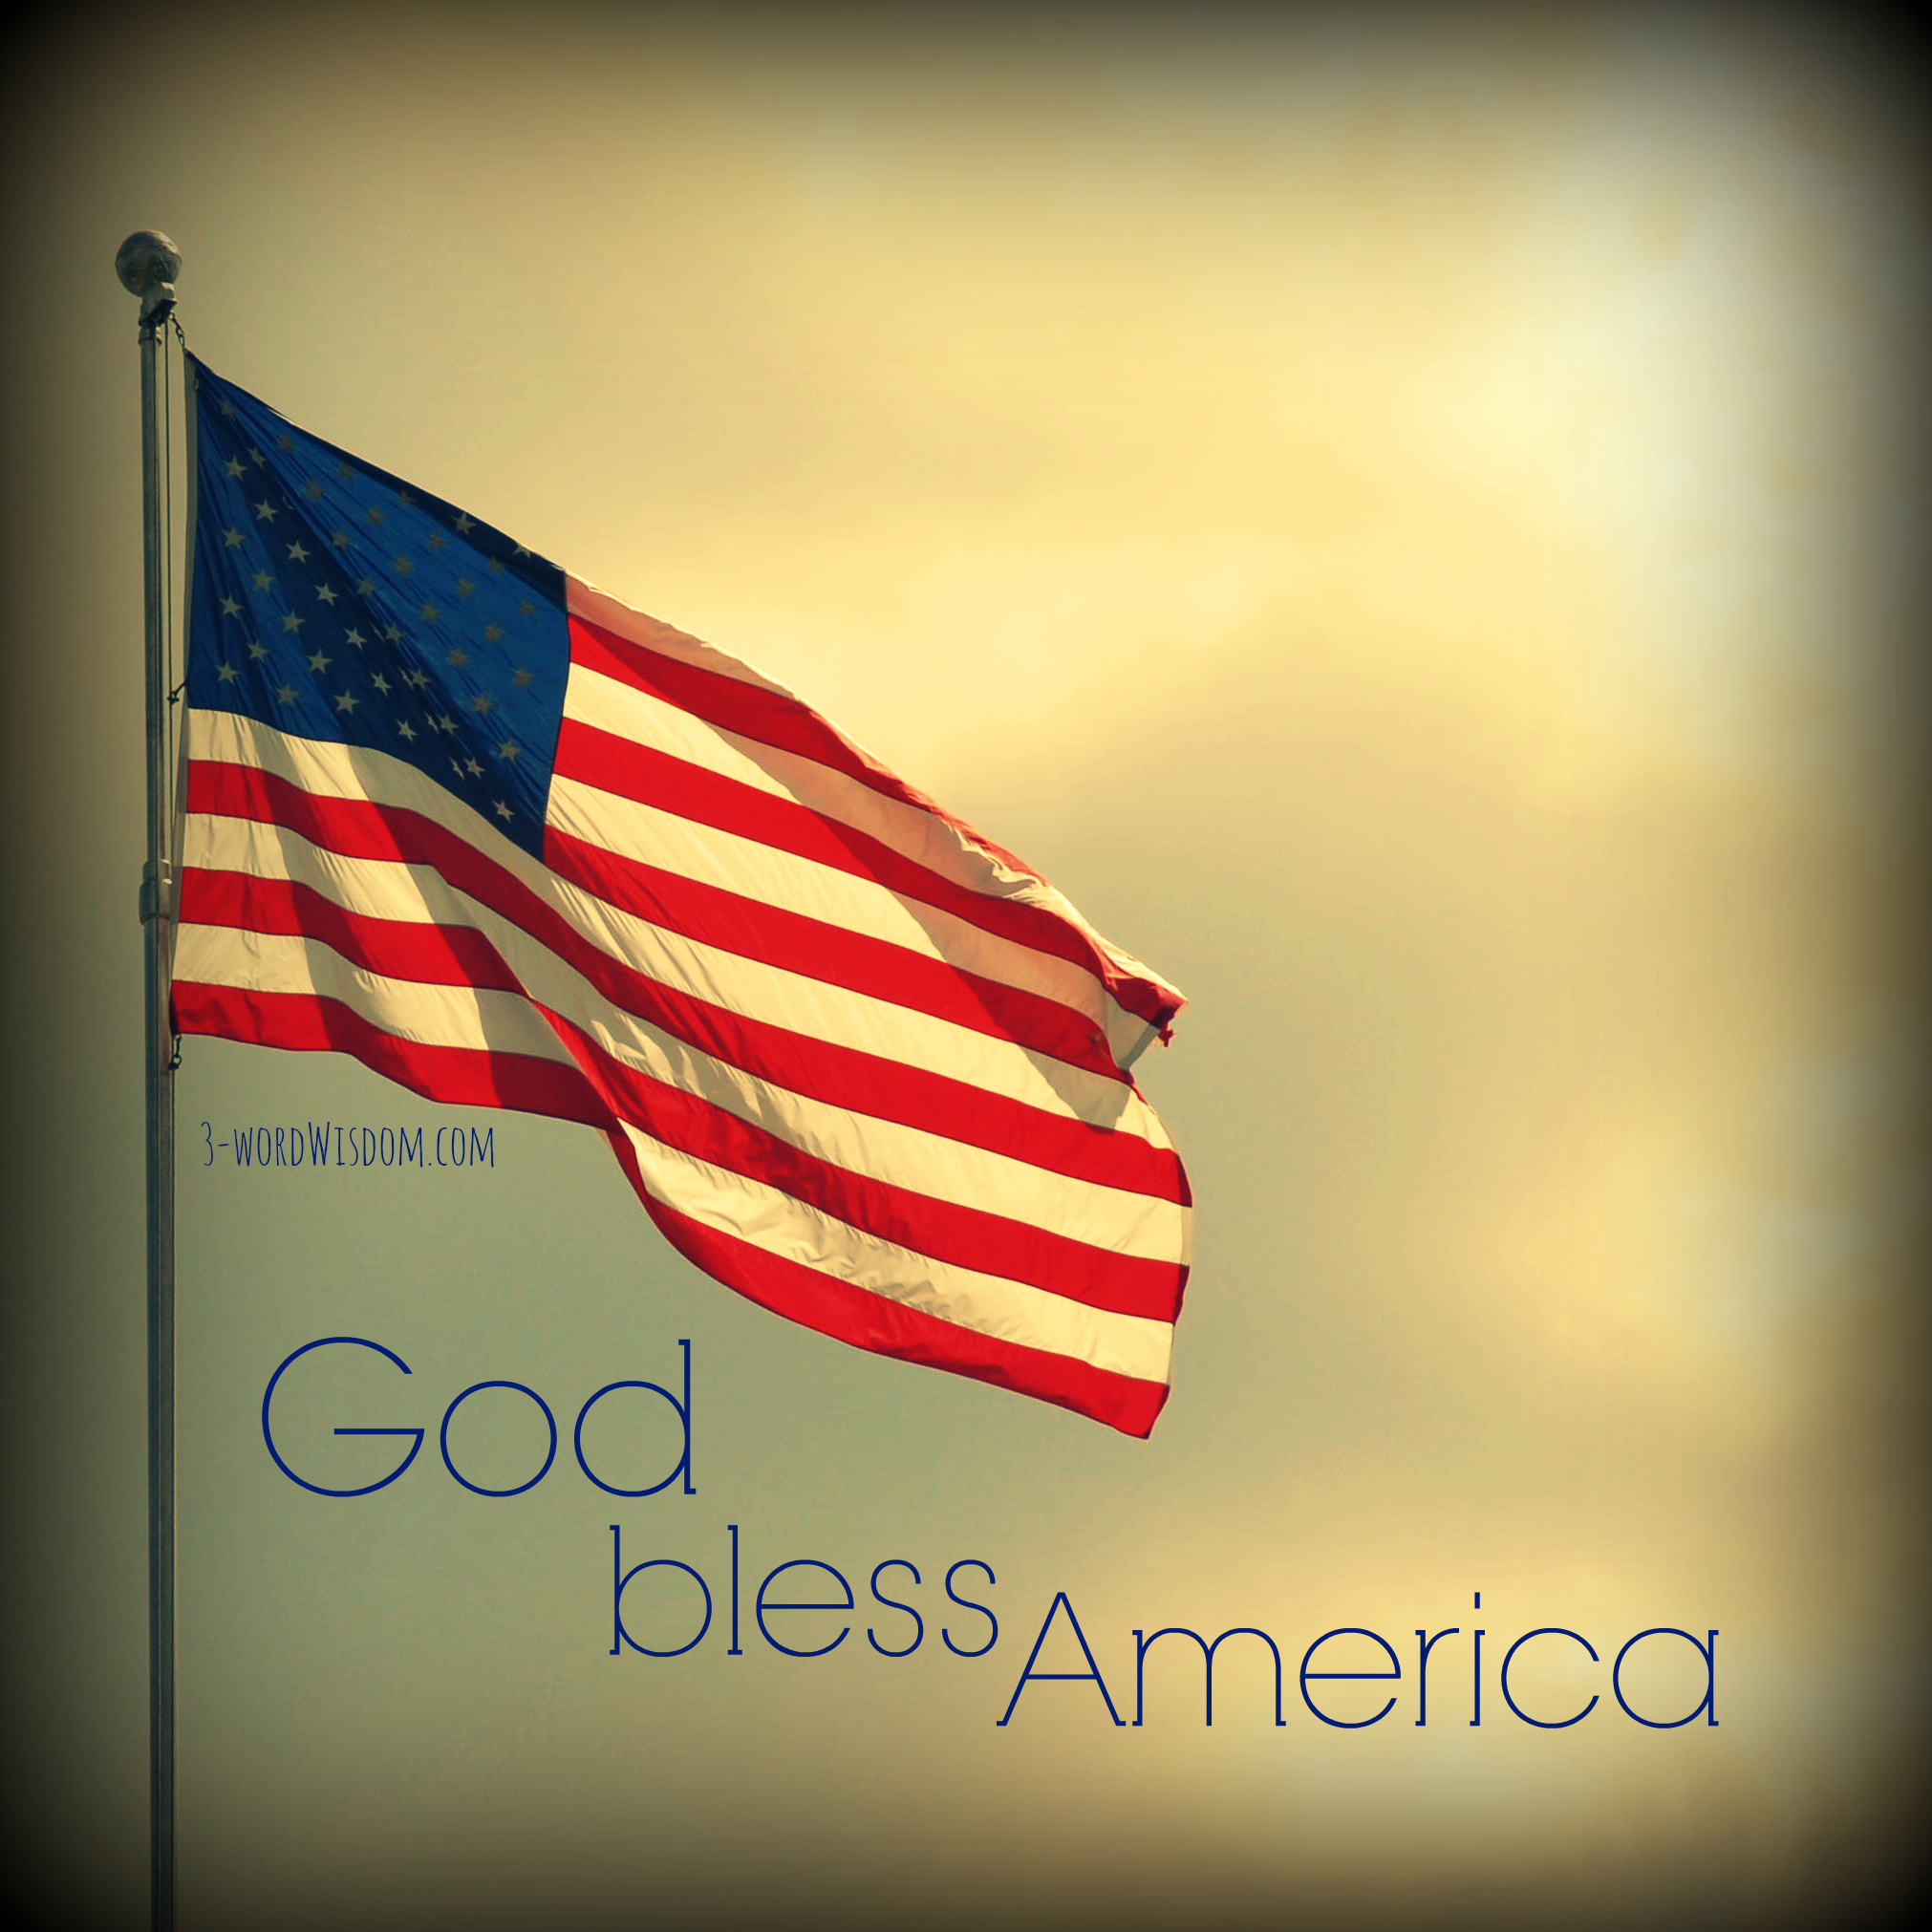 3354 God Bless America Images Stock Photos  Vectors  Shutterstock